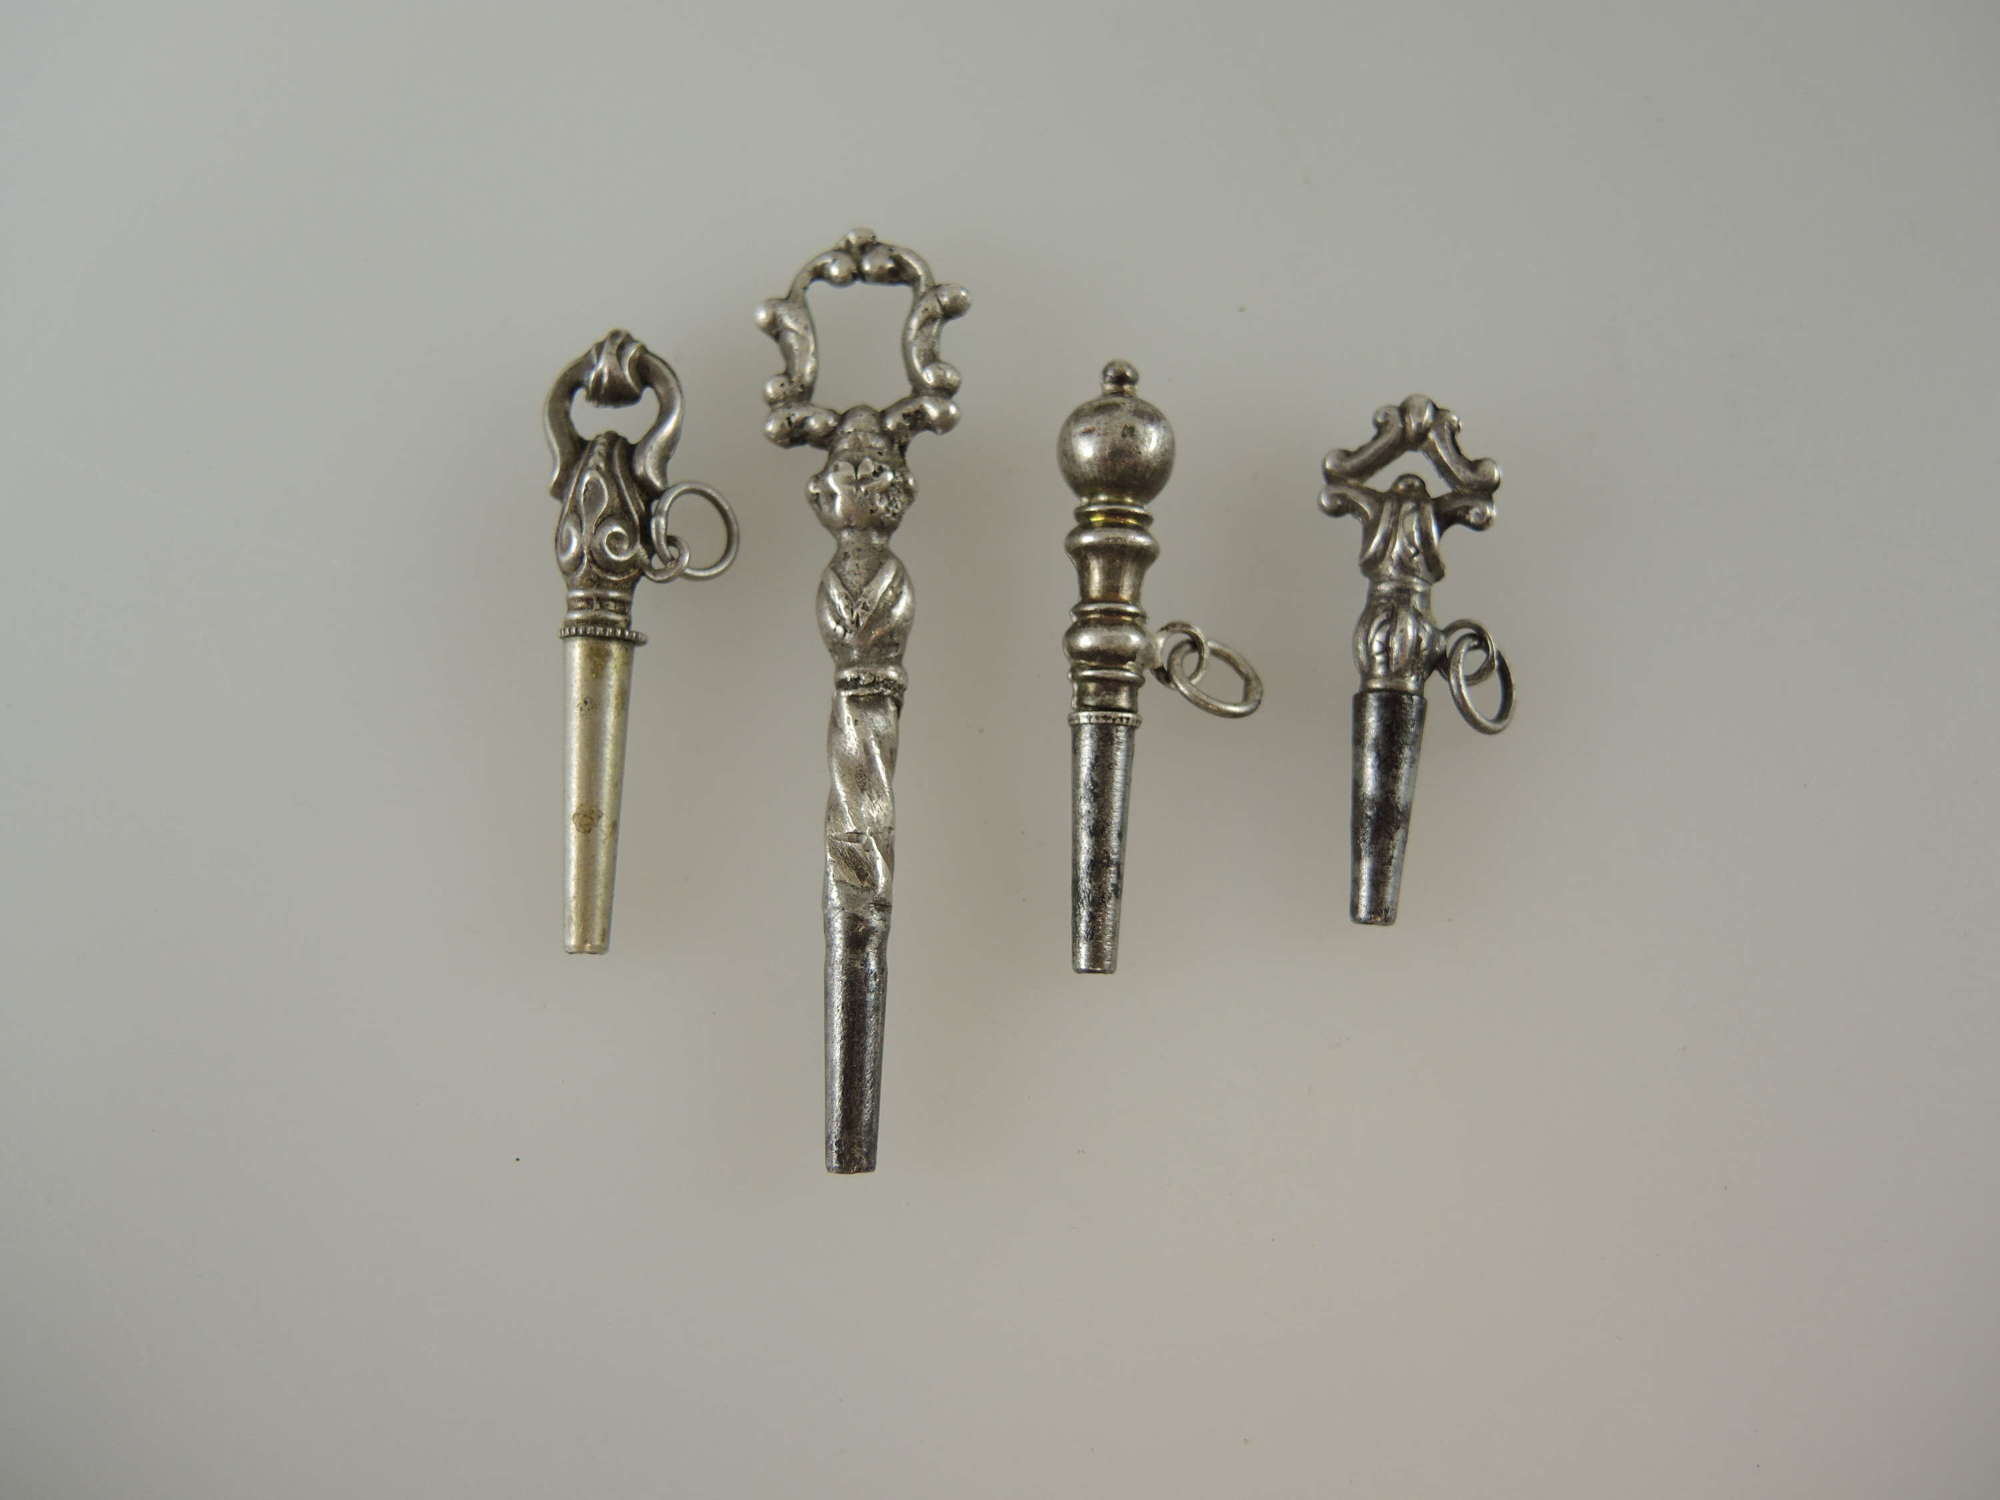 Group of 4 silver pocket watch keys c1800 – 1825